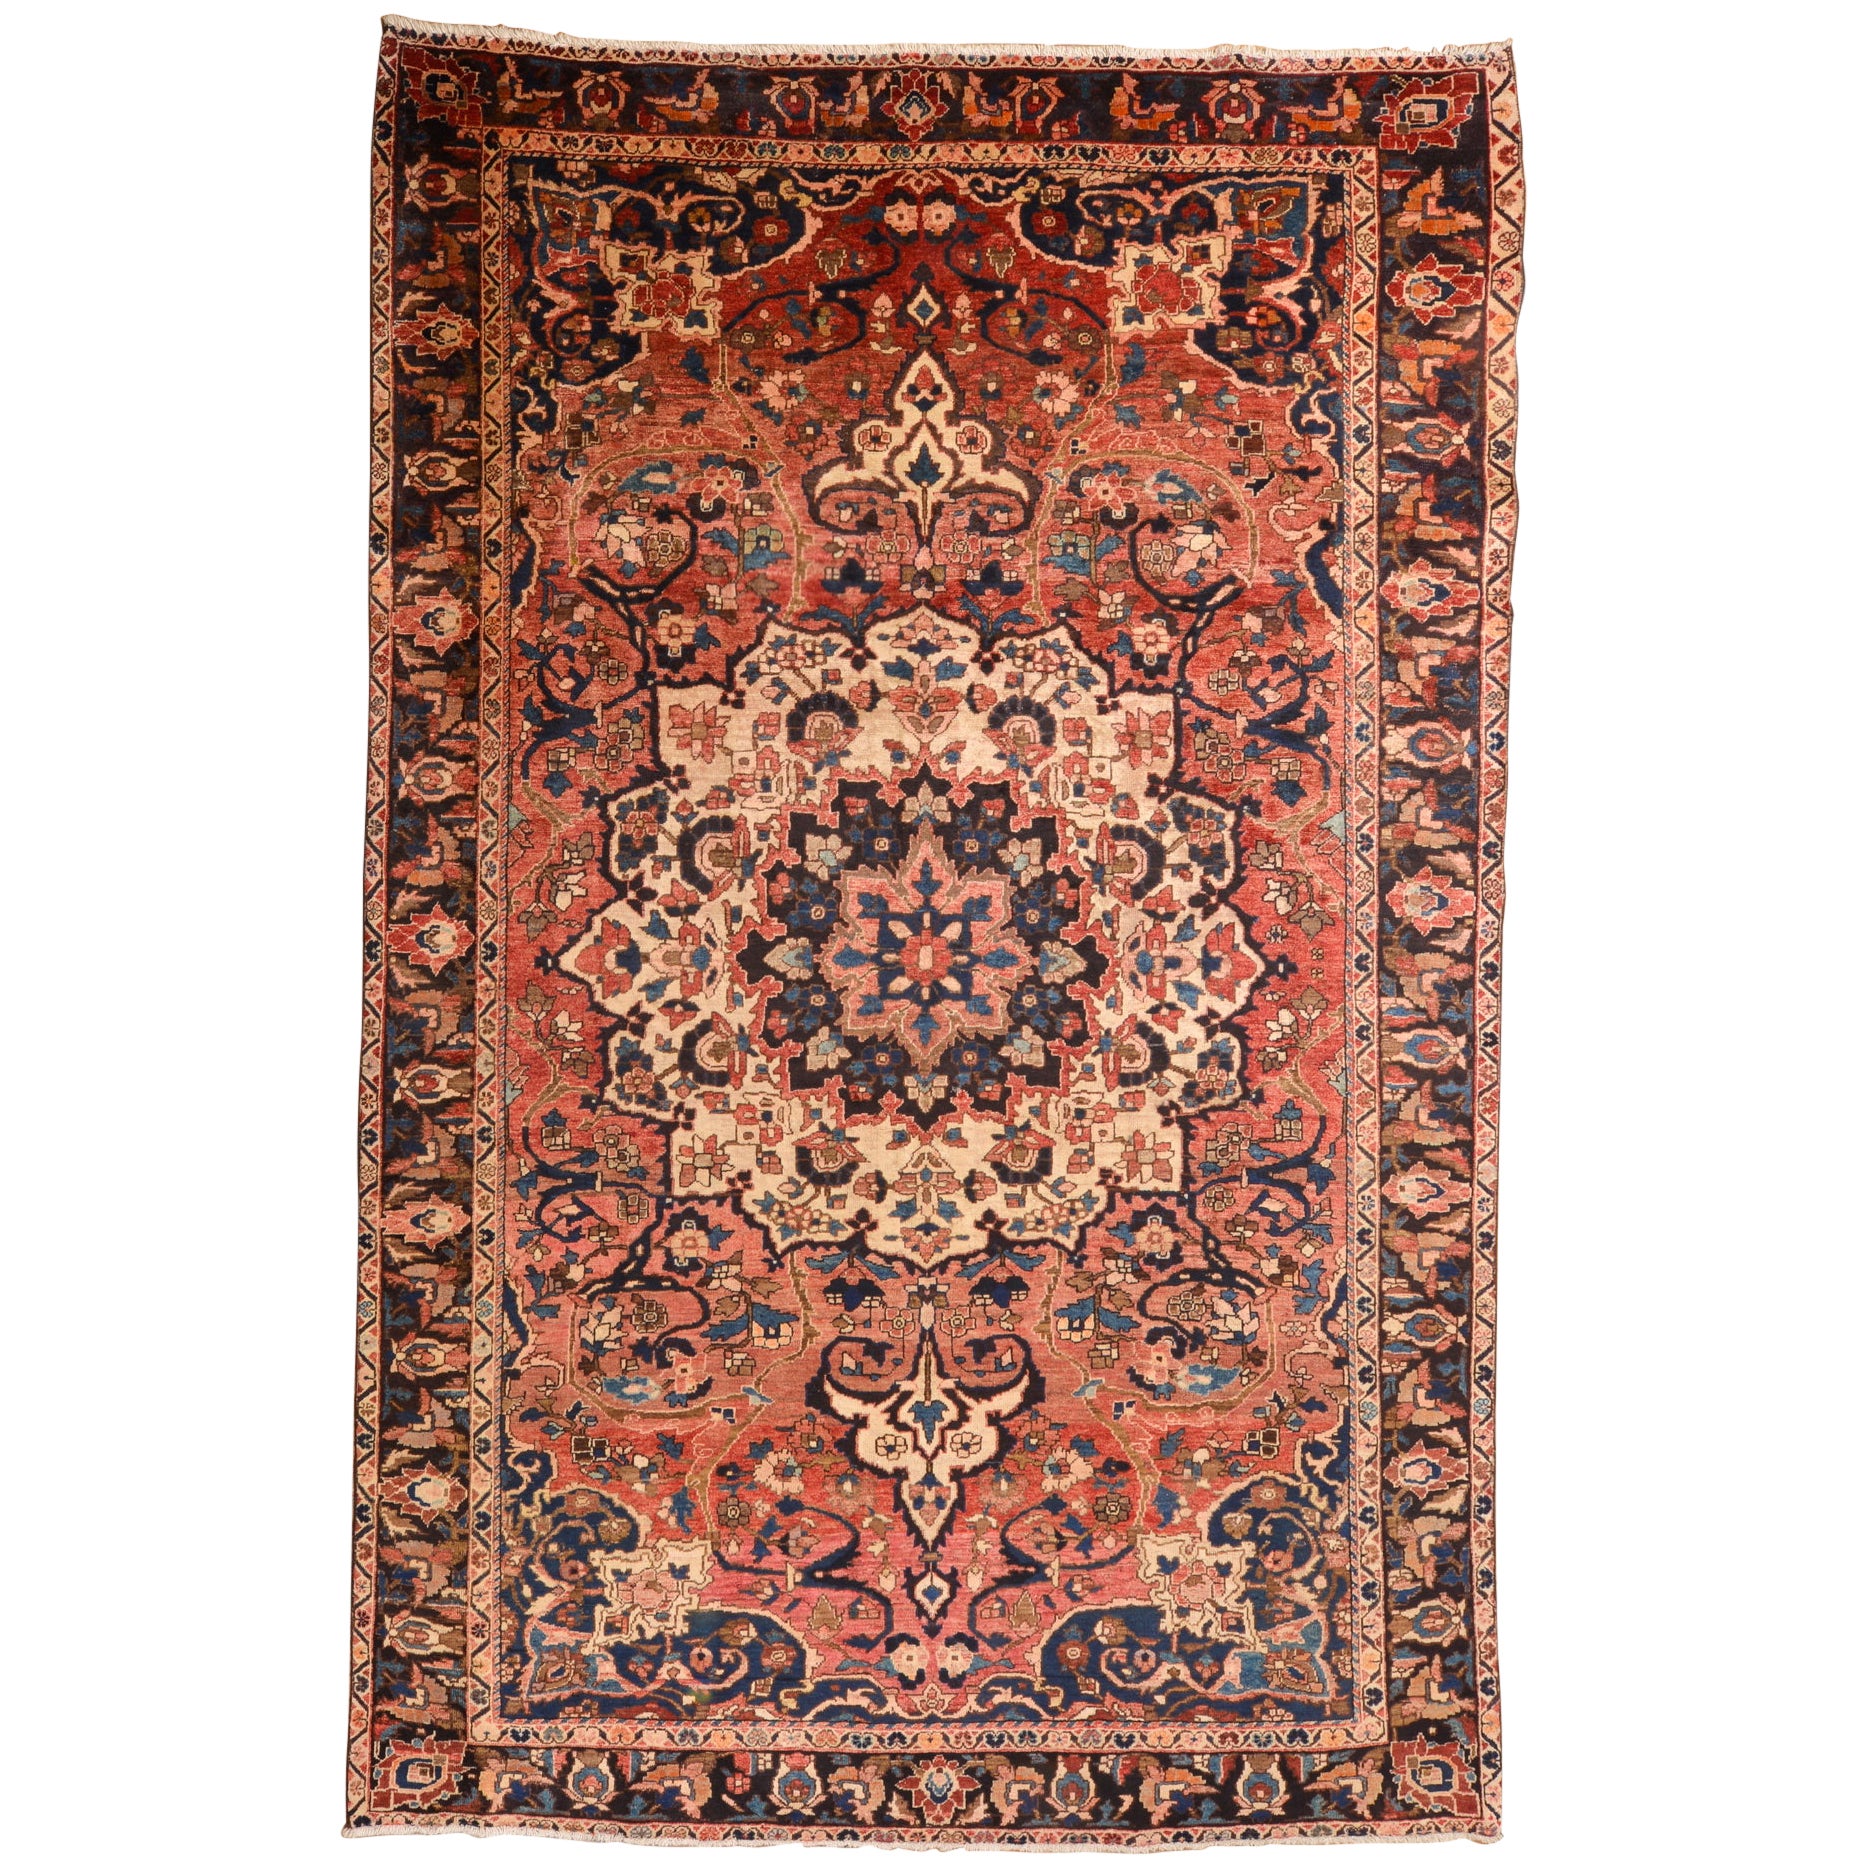 Large Armenian Carpet with Classic Design